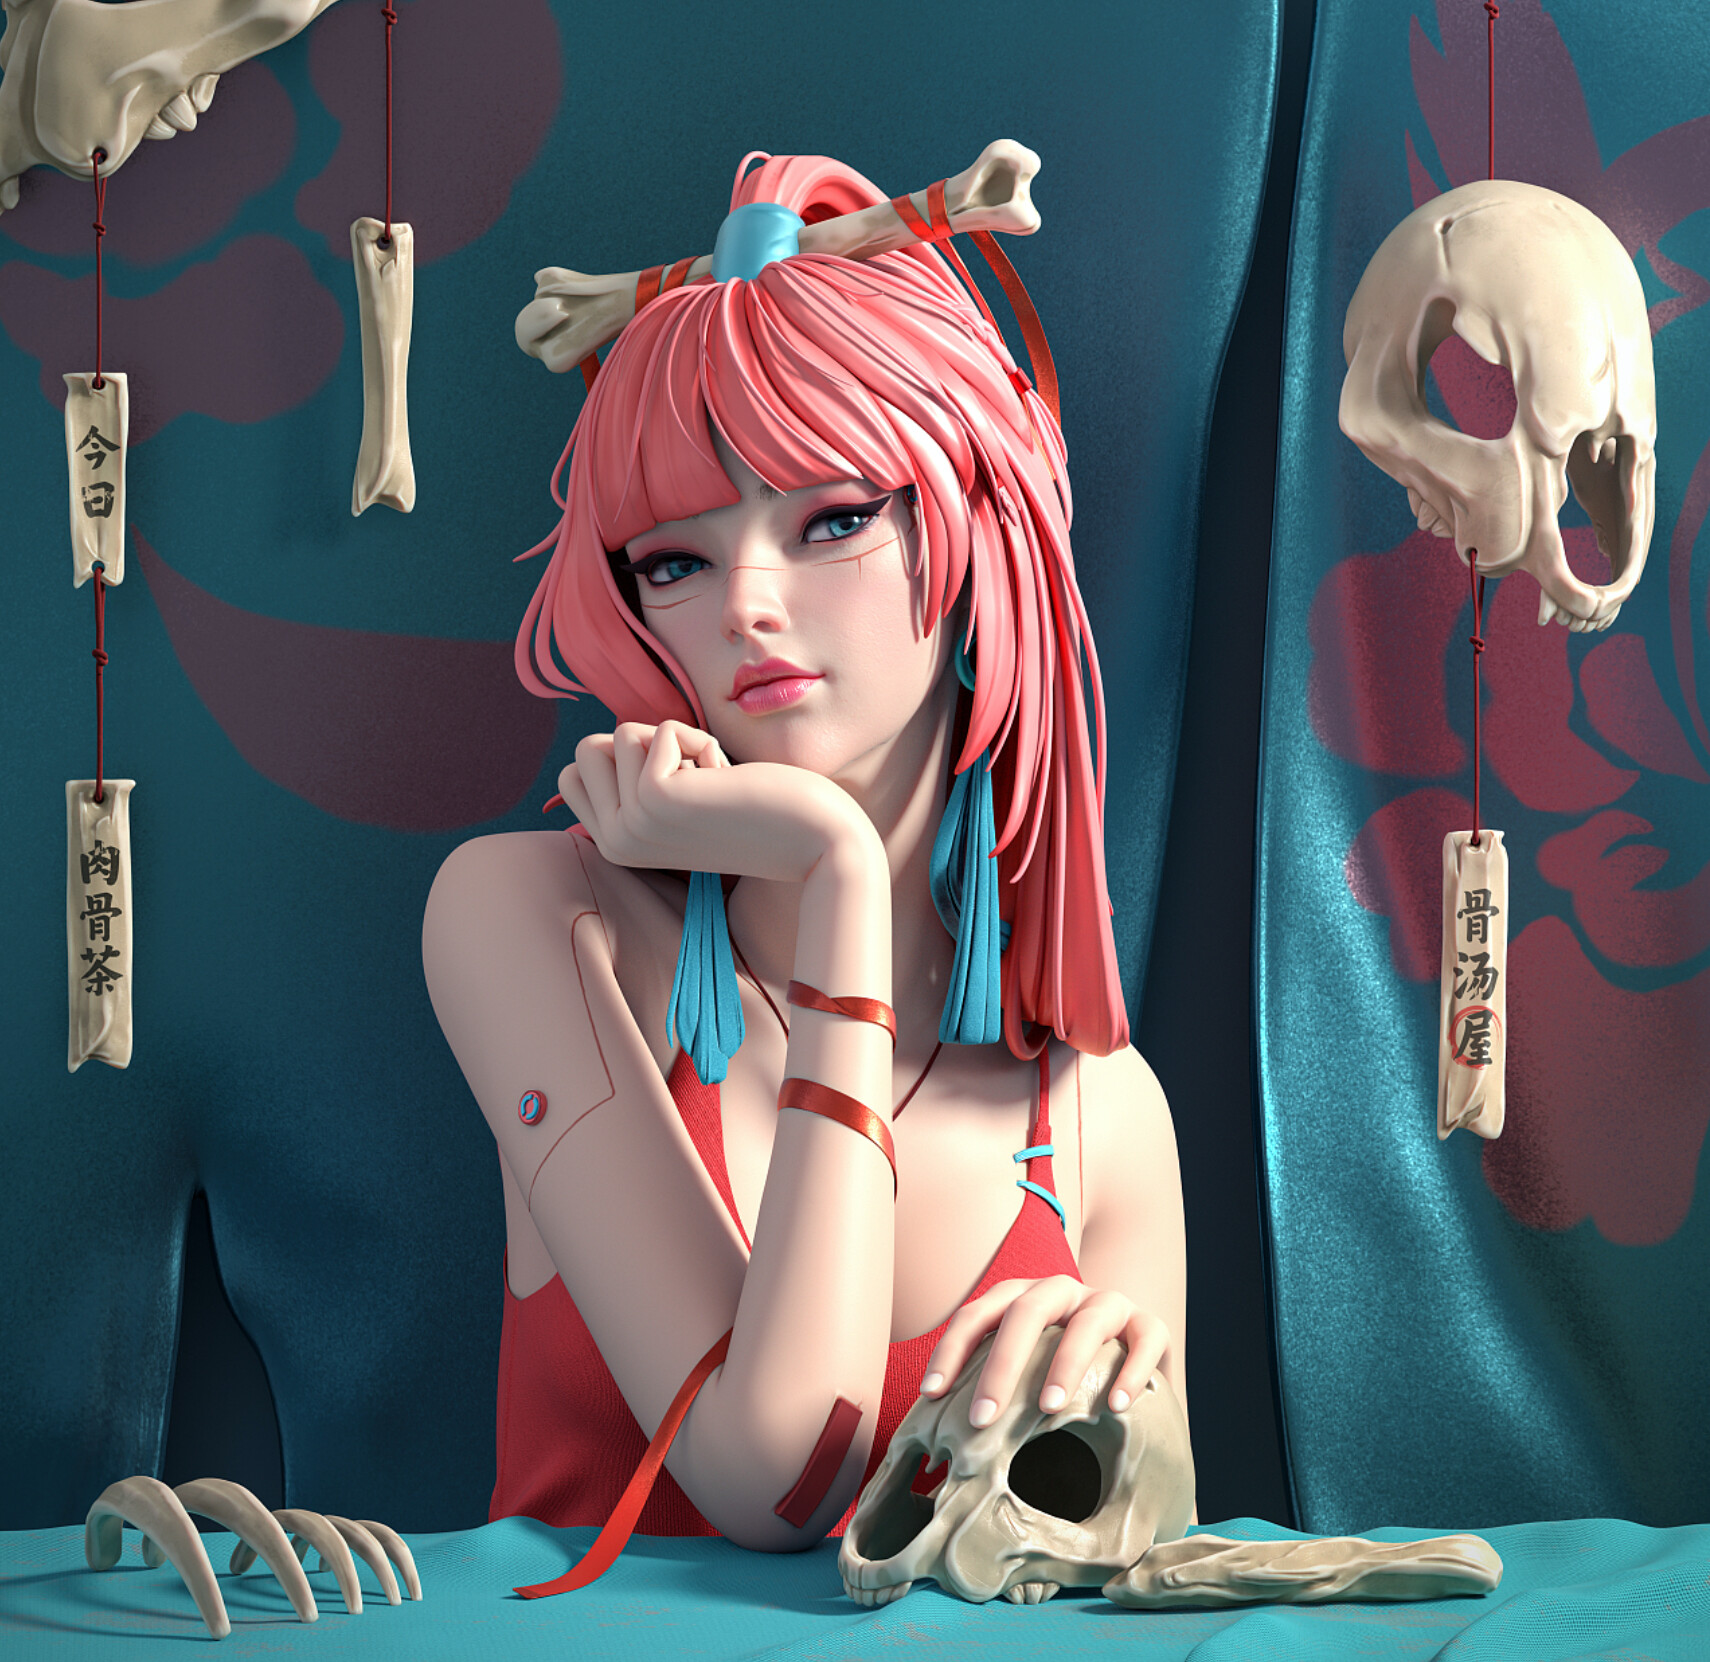 General 1710x1662 digital art artwork illustration women portrait pink hair blue eyes skull bones CGI